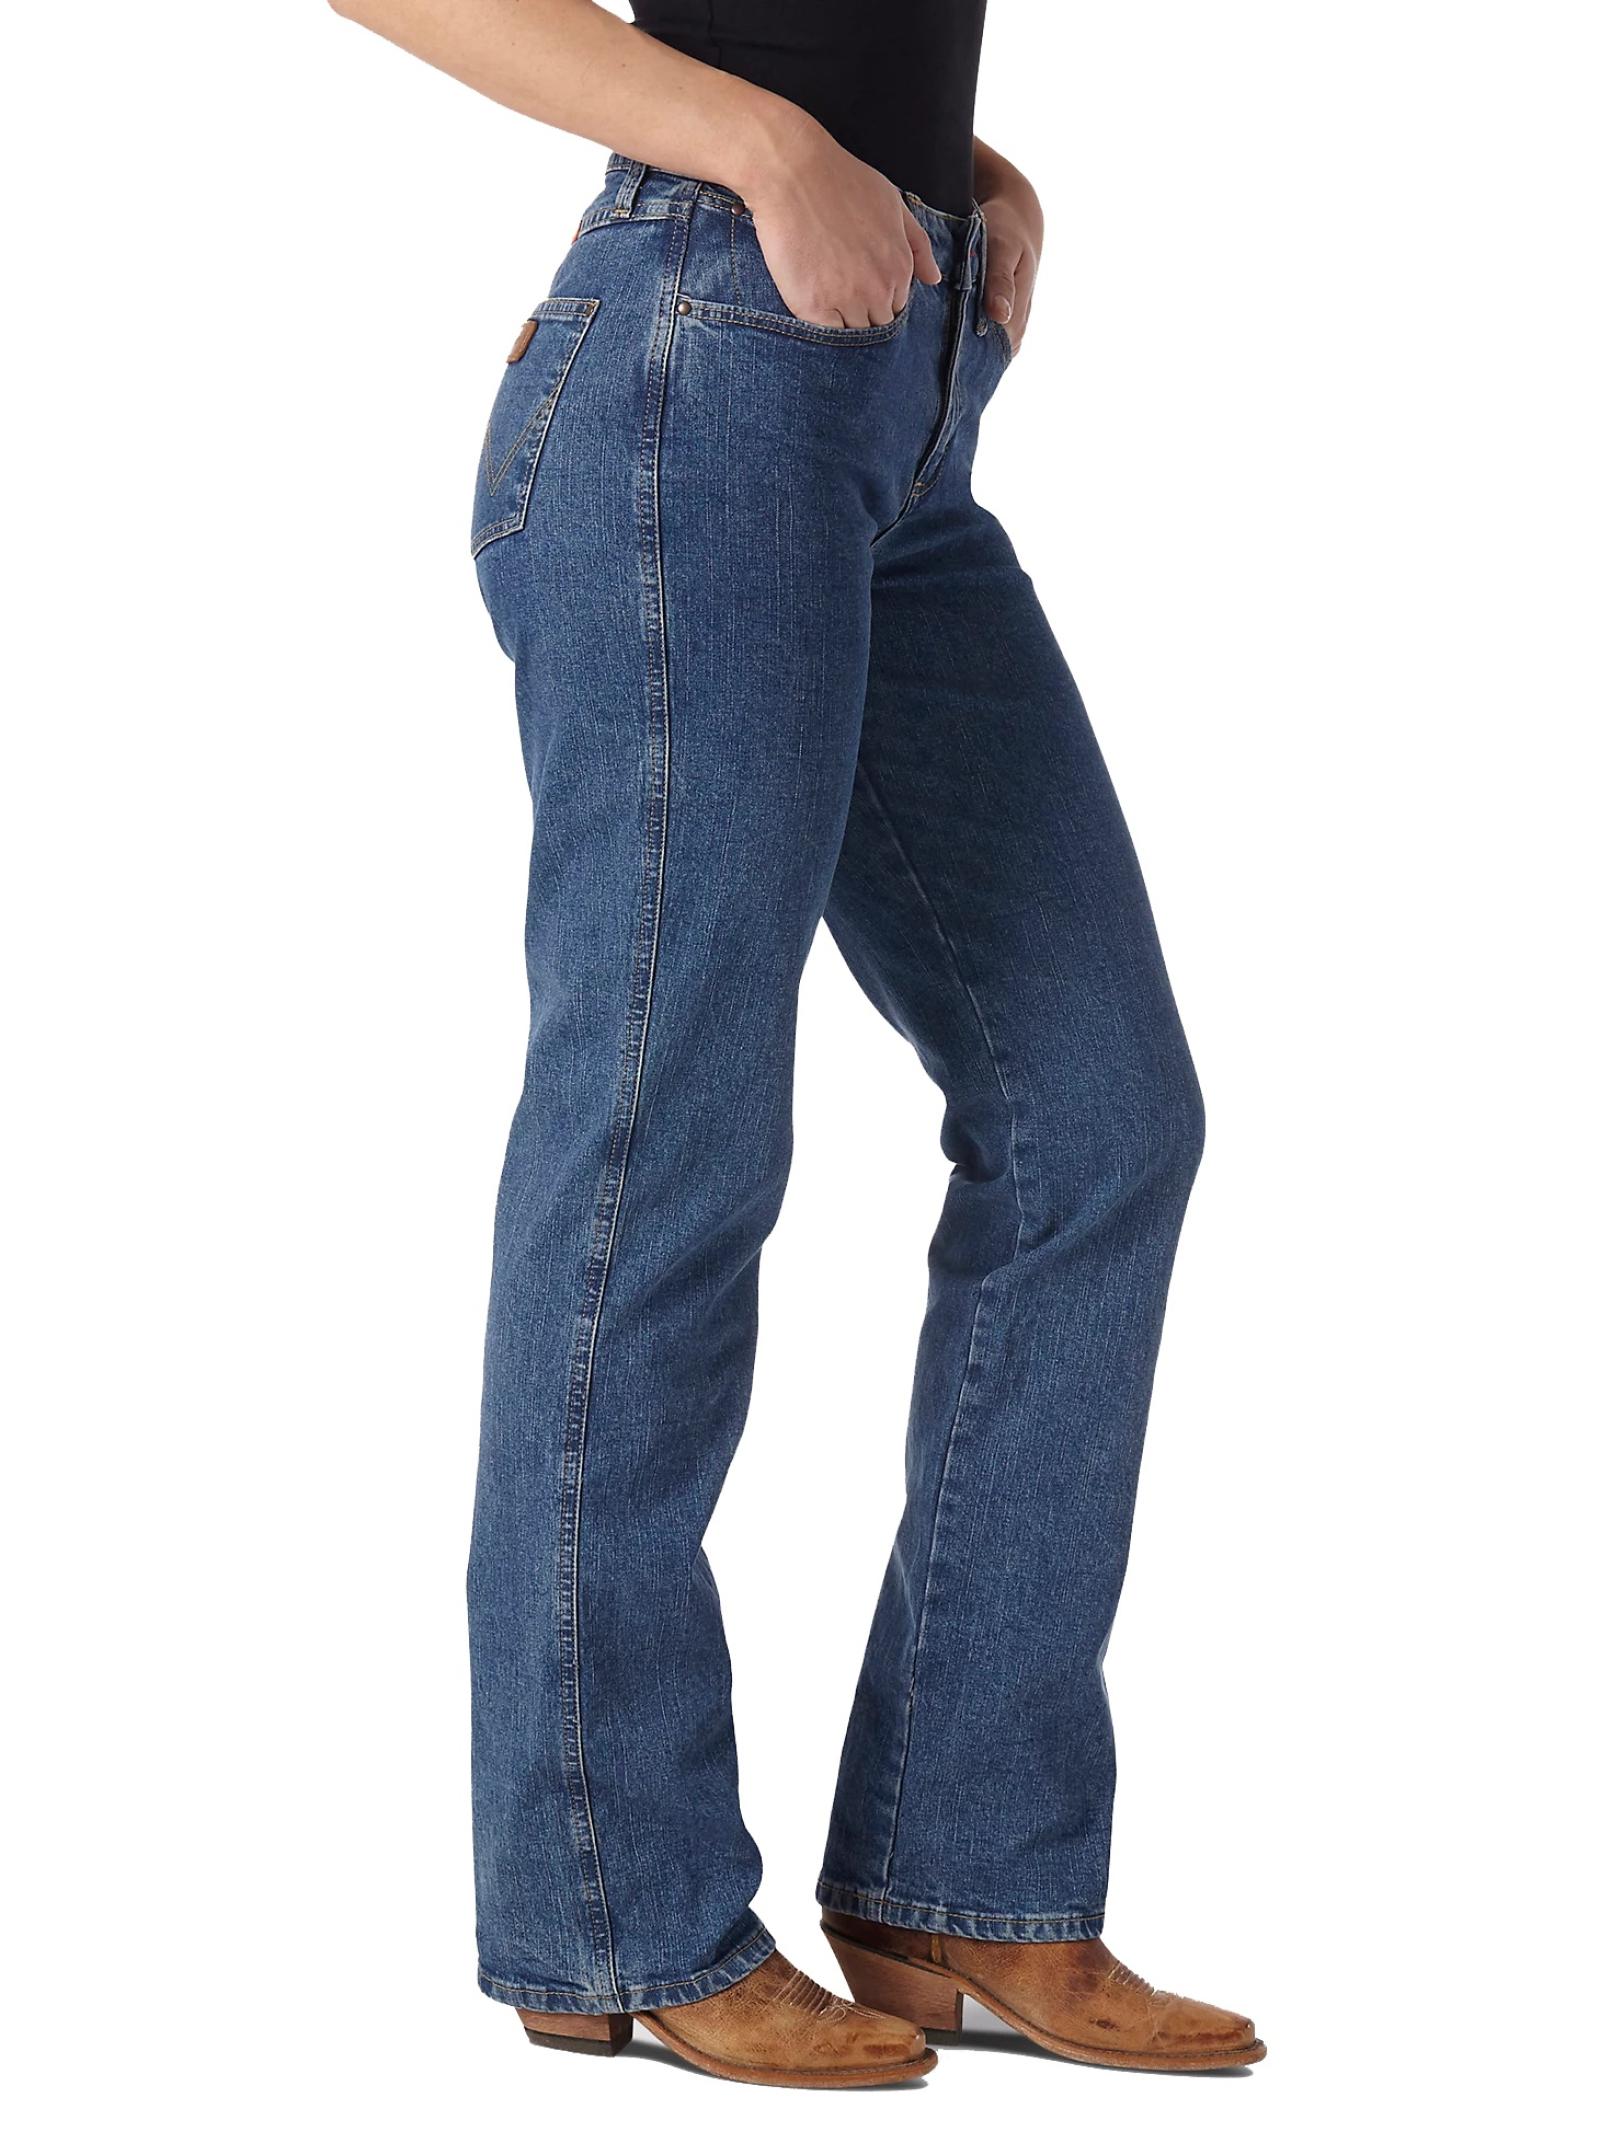 Wrangler Women's Cowboy Cut Slim Fit Stretch Jean